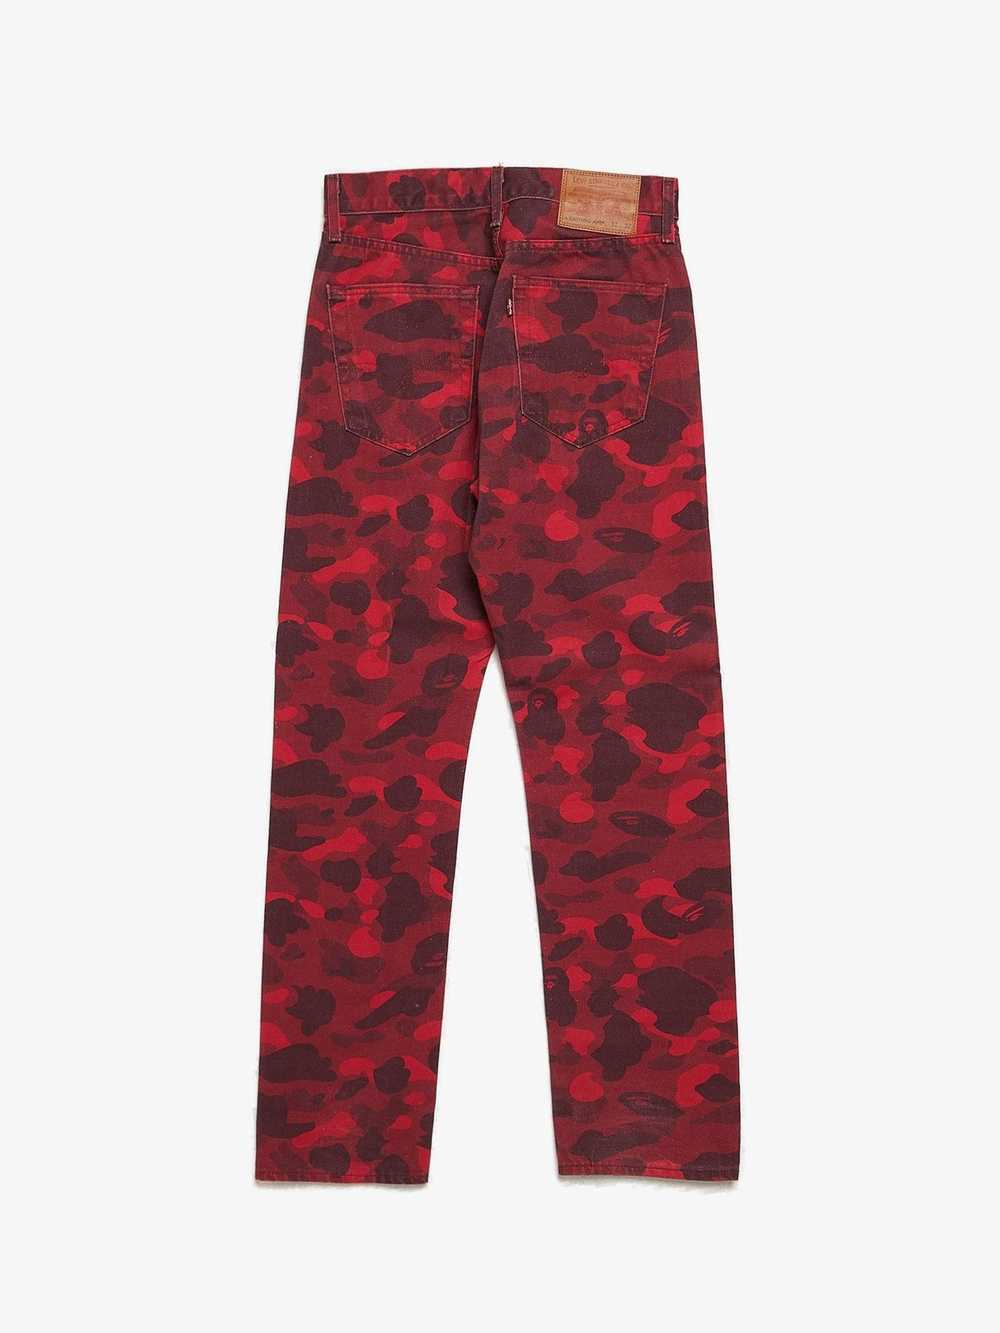 Bape Red Multi Logoed Camo Buttoned Cotton Jeans - image 2